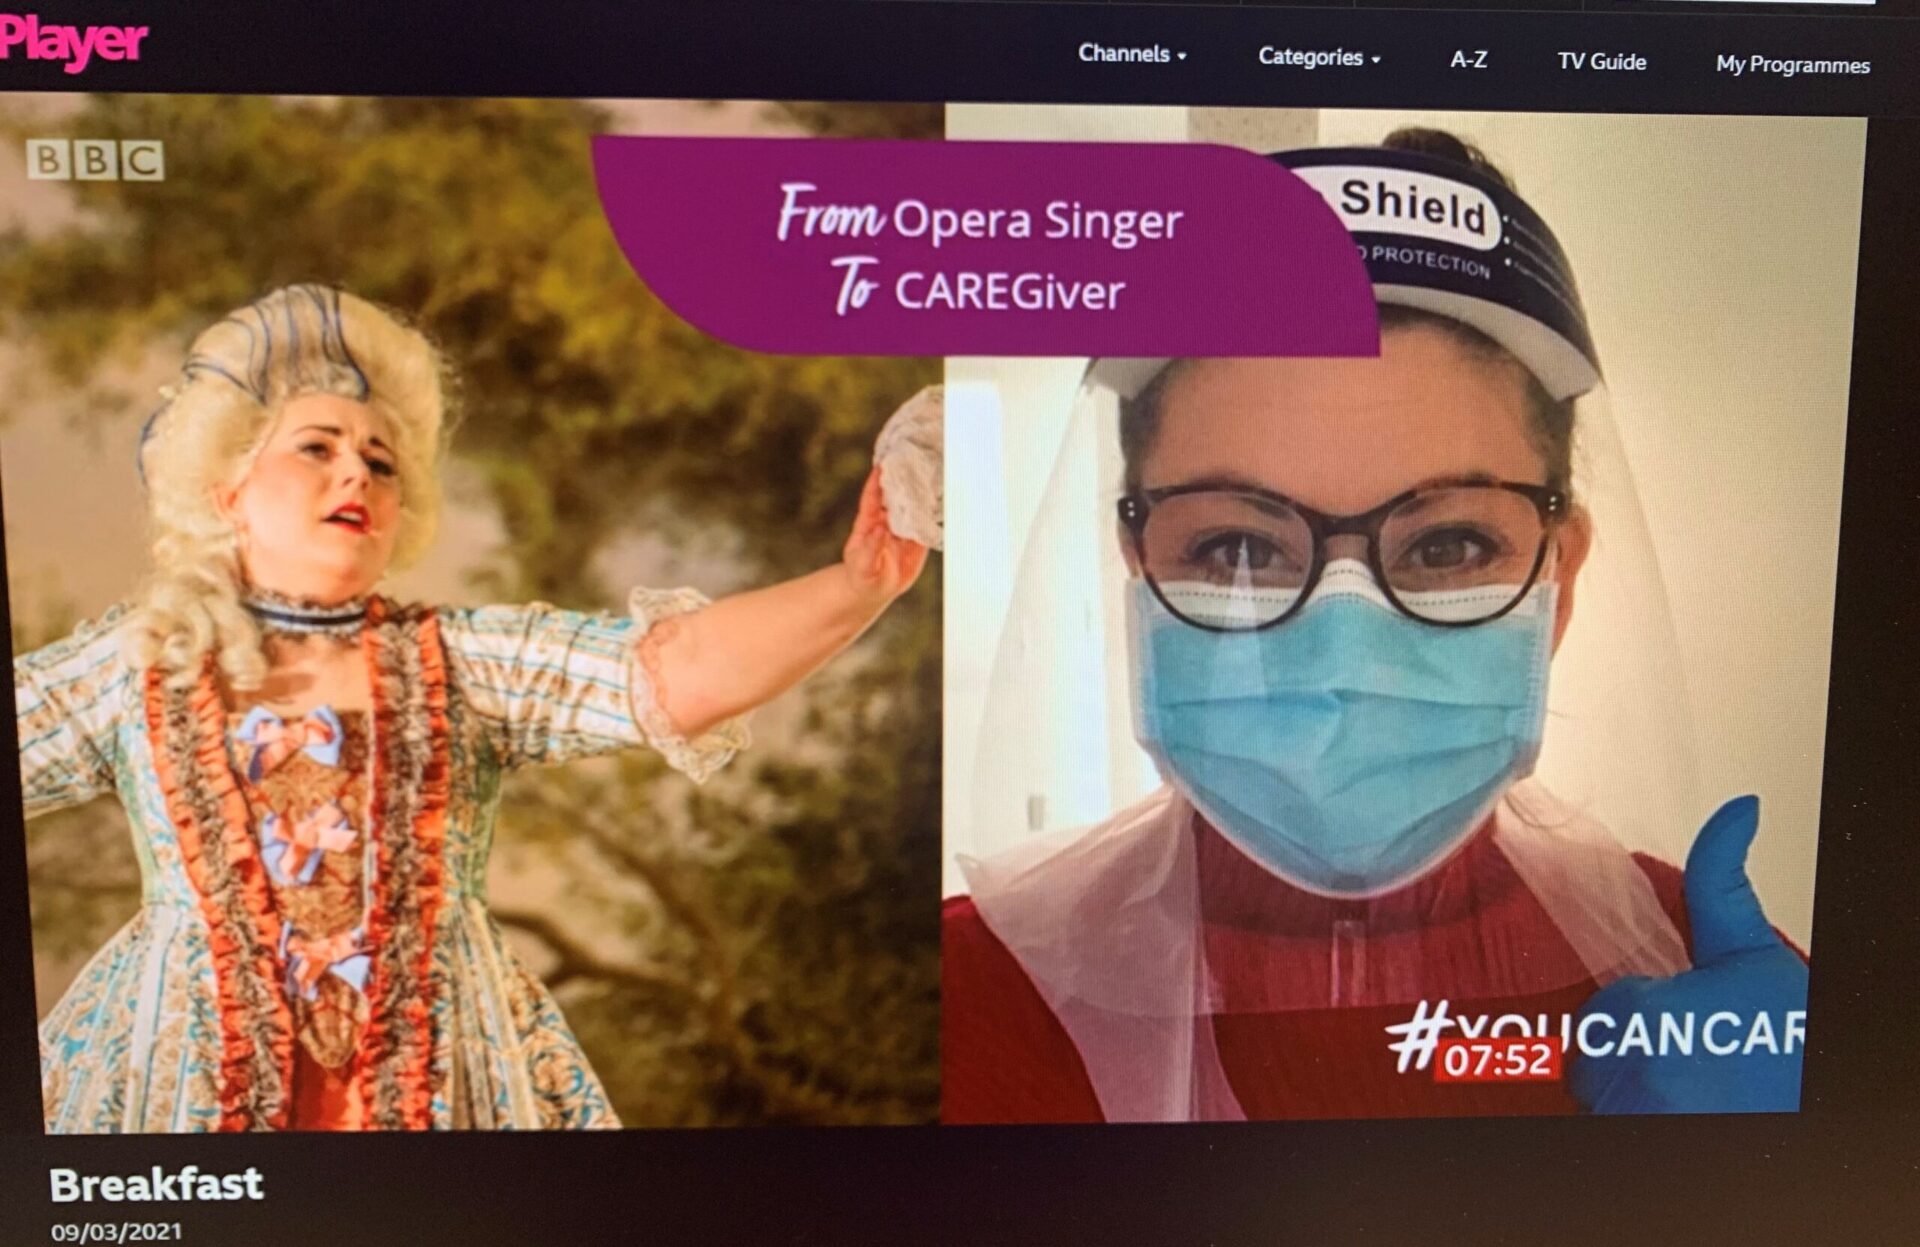 Opera singing caregiver appears on TV